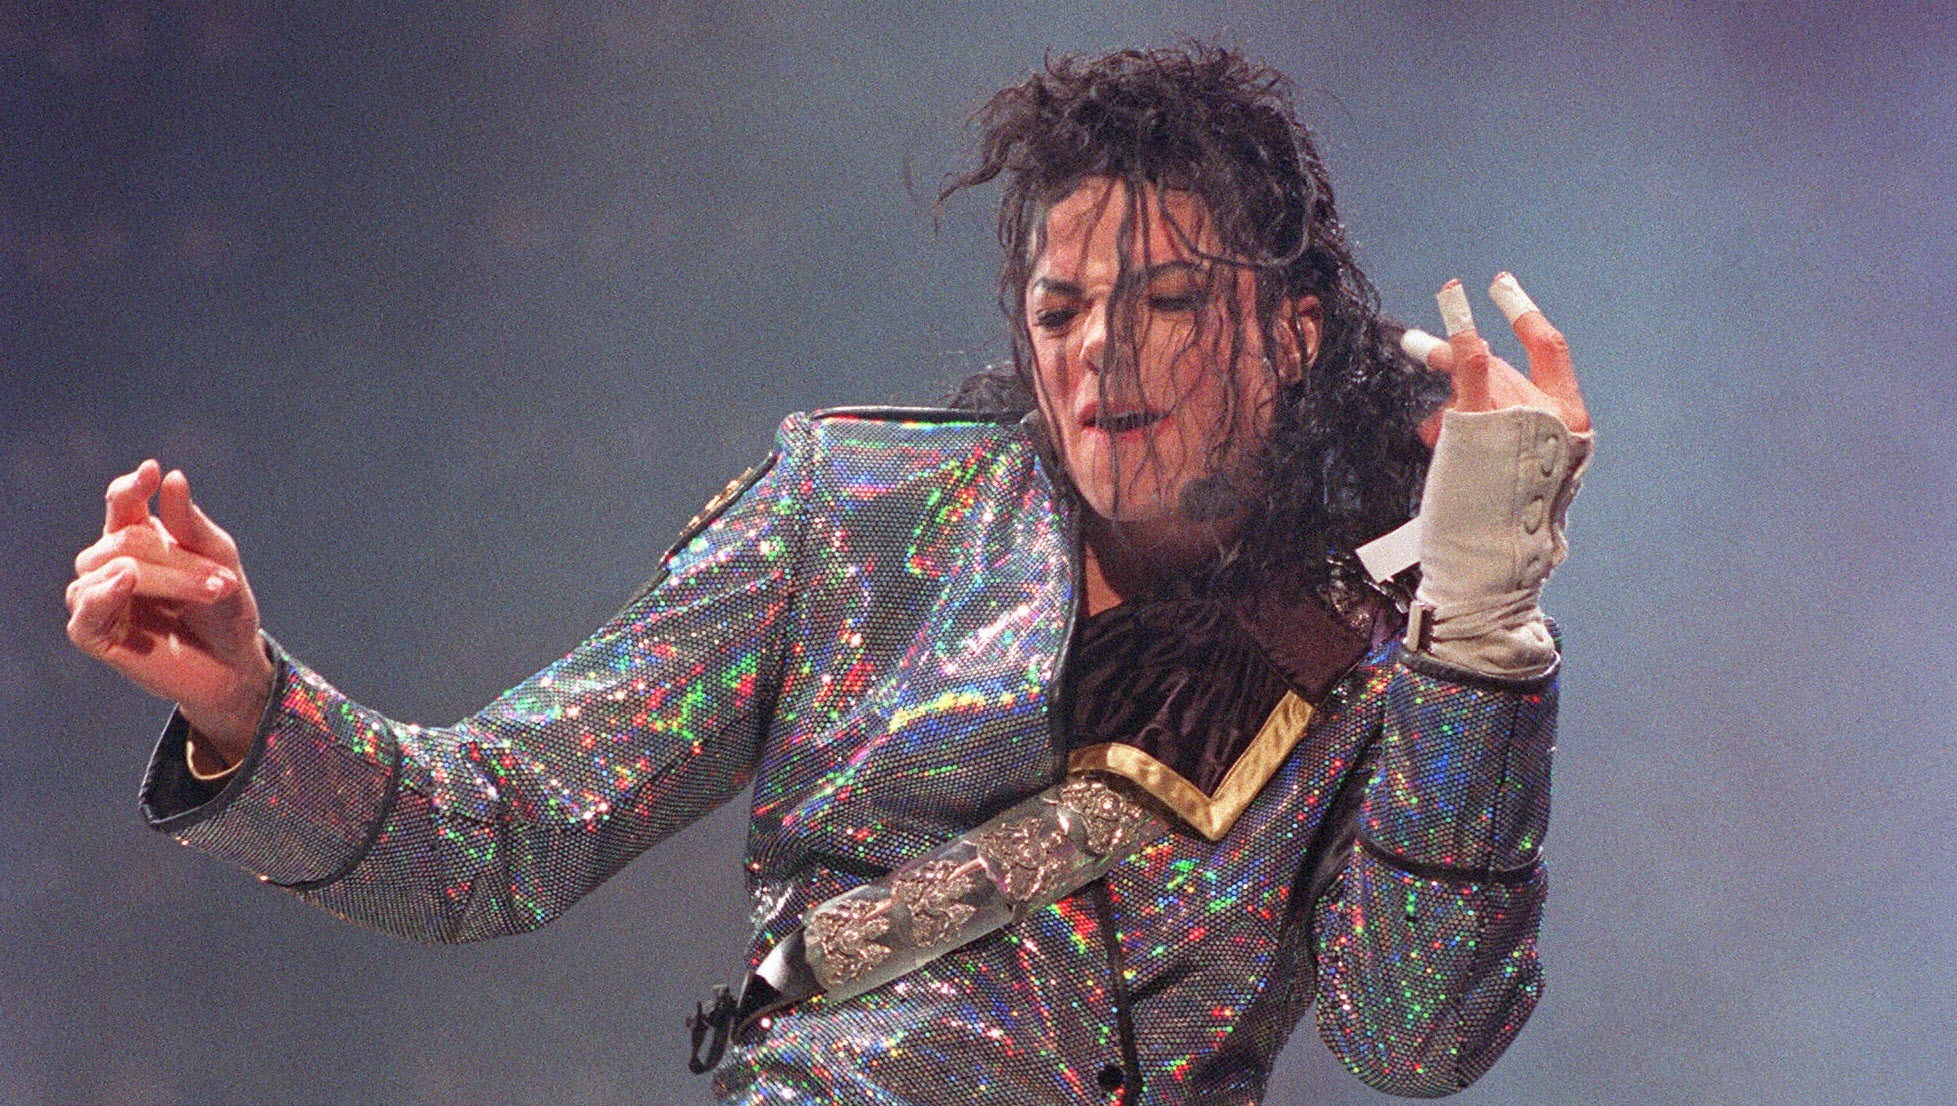 Michael Jackson's Top 10 Signature Dance Moves